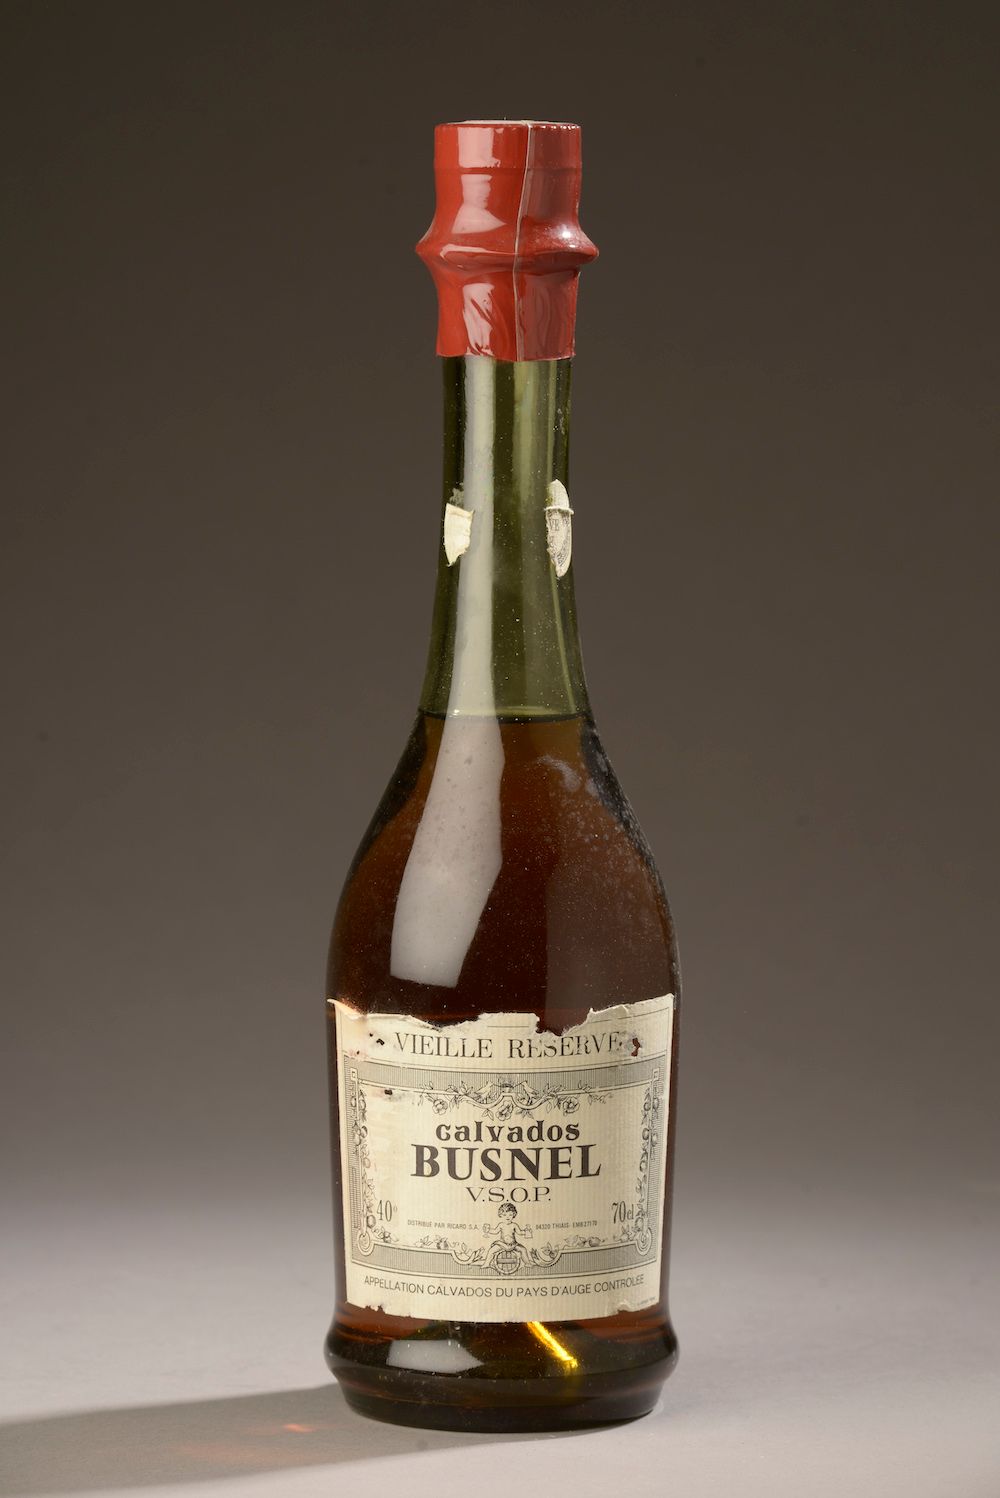 Null 1 botella de CALVADOS "Vieille réserve", Busnel